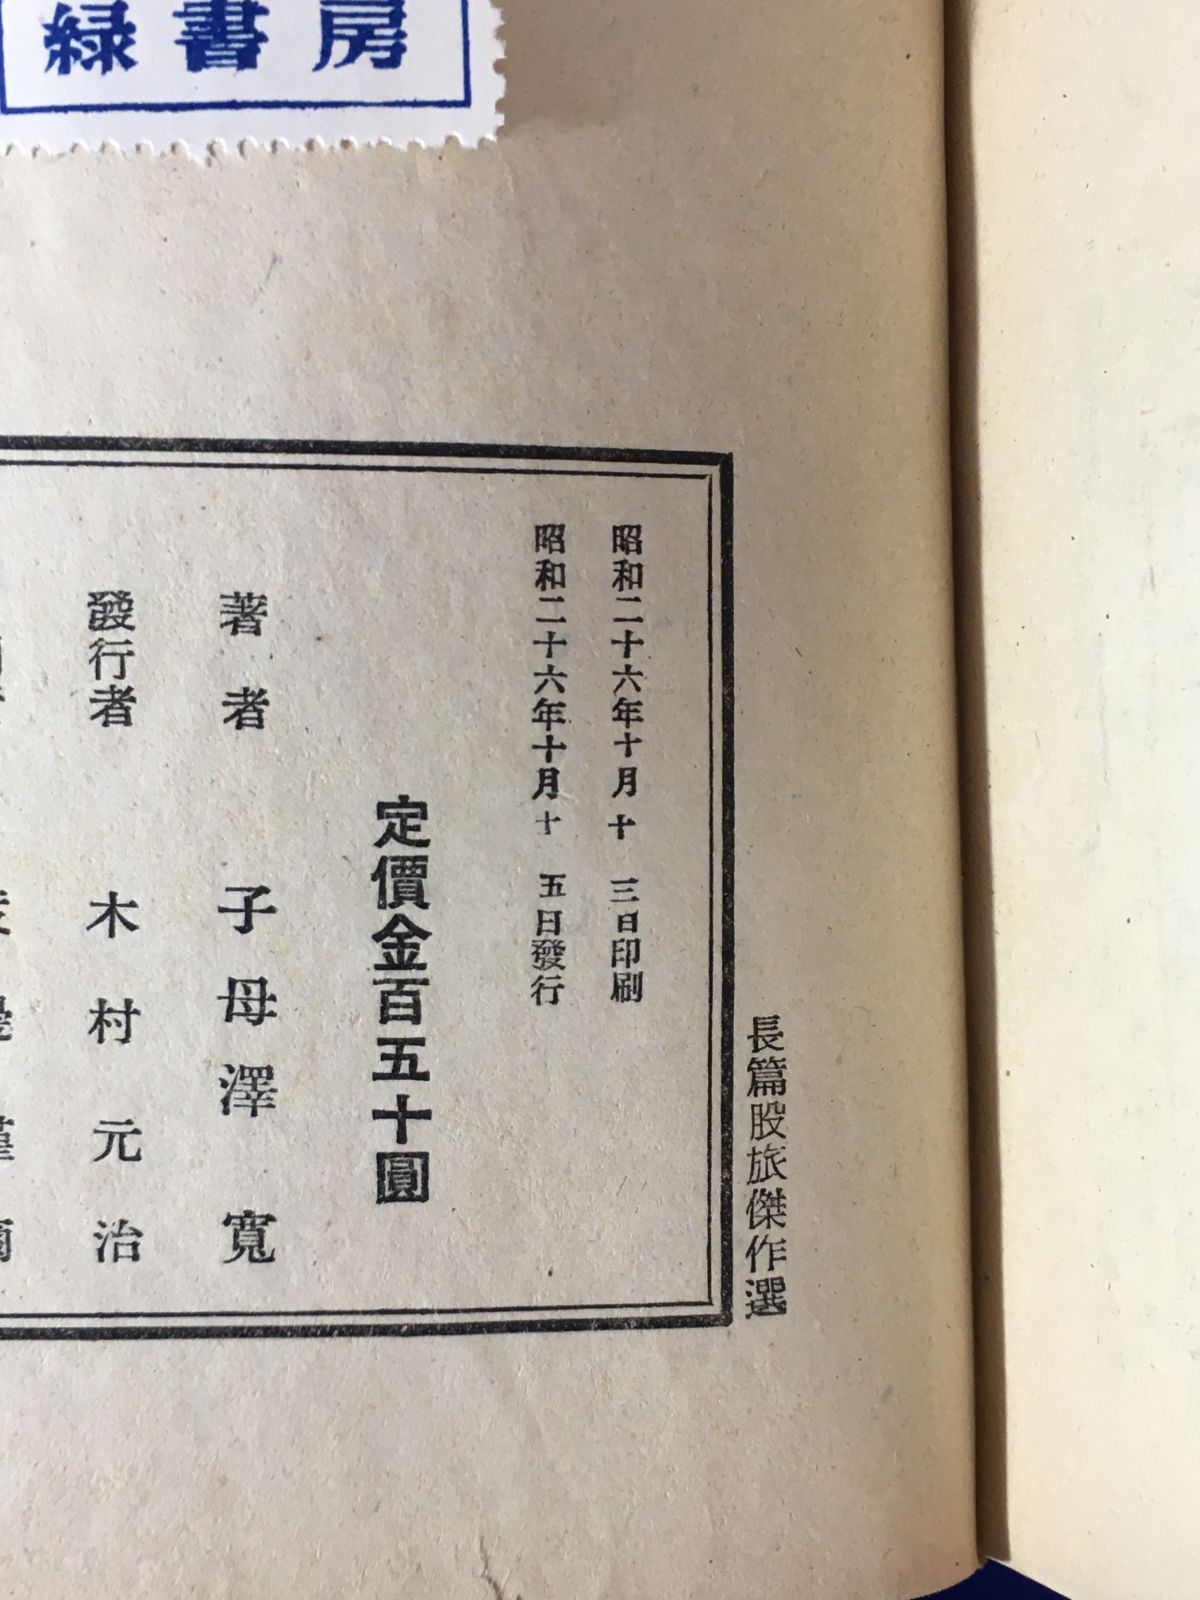 明月 赤城ごよみ(長編股旅傑作選) 昭和26年 子母沢寛 - 文学、小説